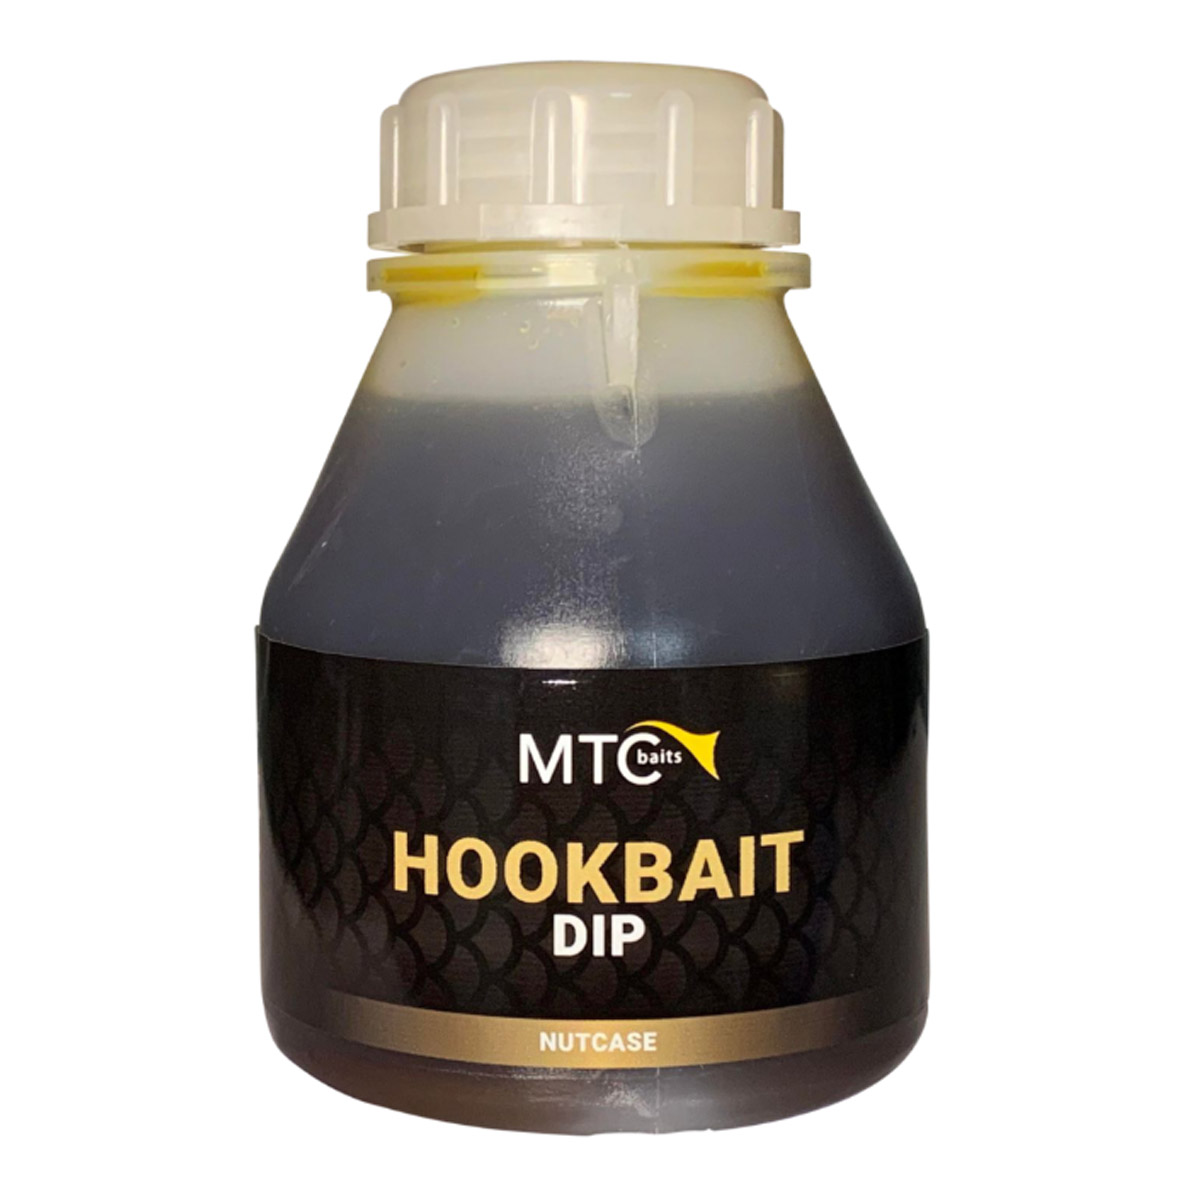 MTC Baits Hookbait Dip NutCase